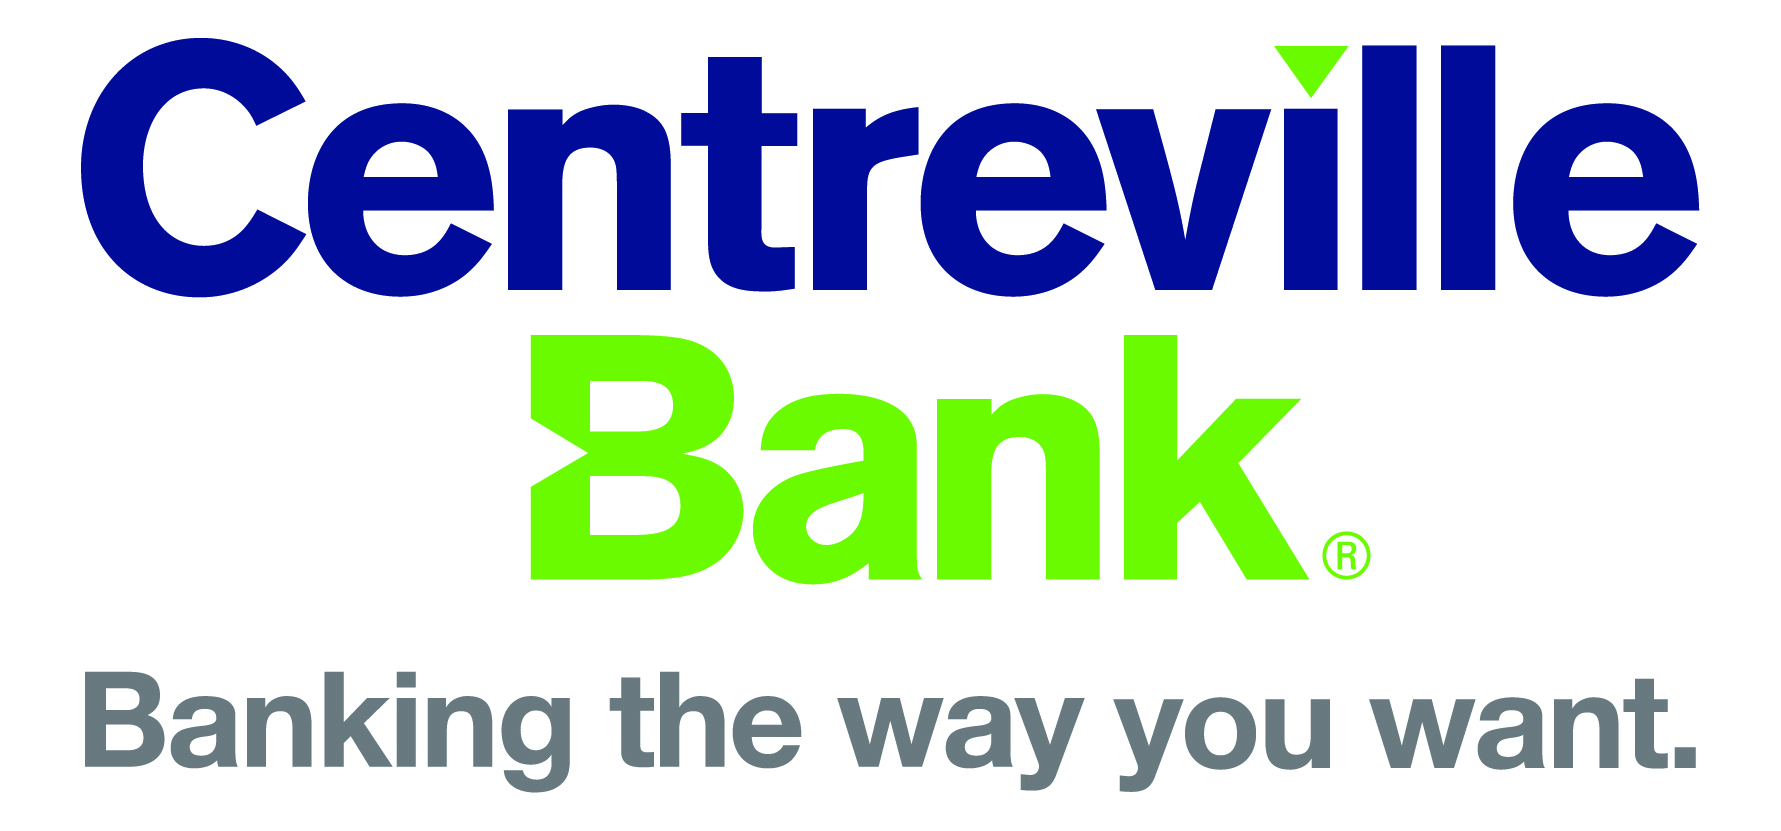 G - Centreville Savings Bank